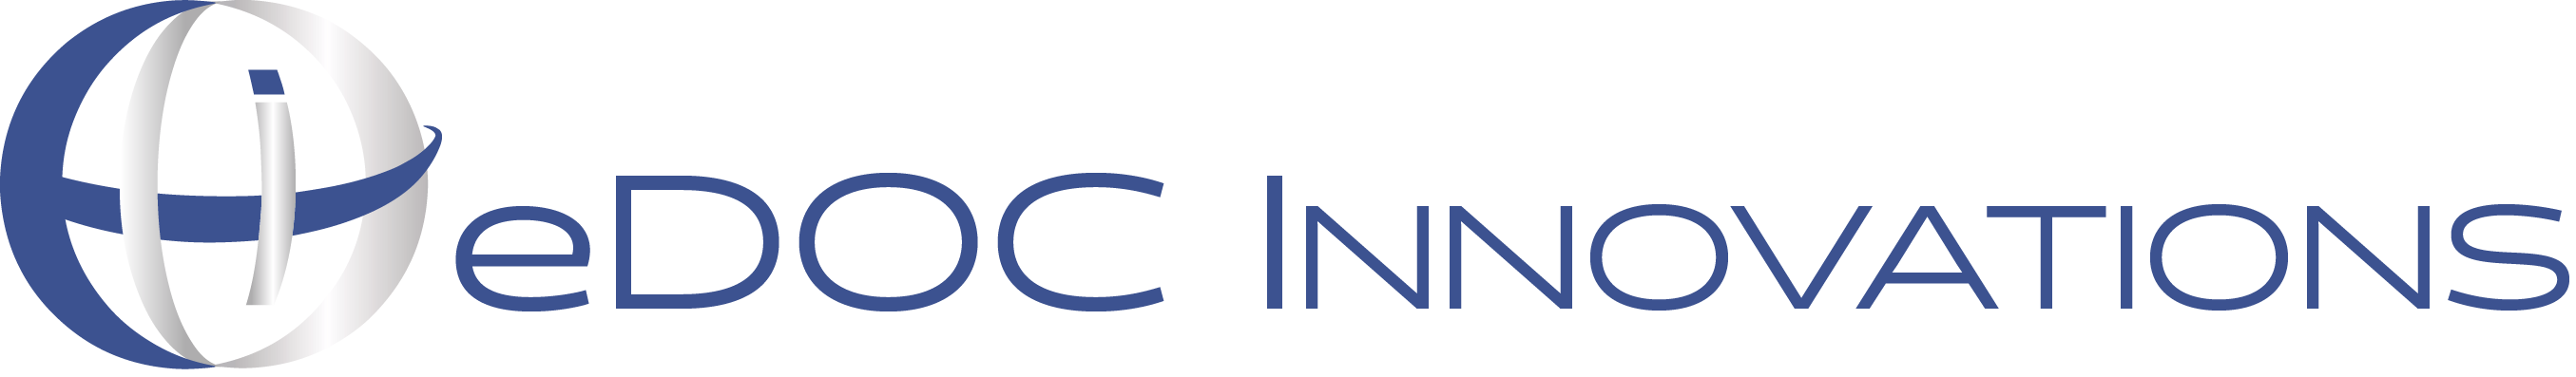 eDOC Innovations Logo